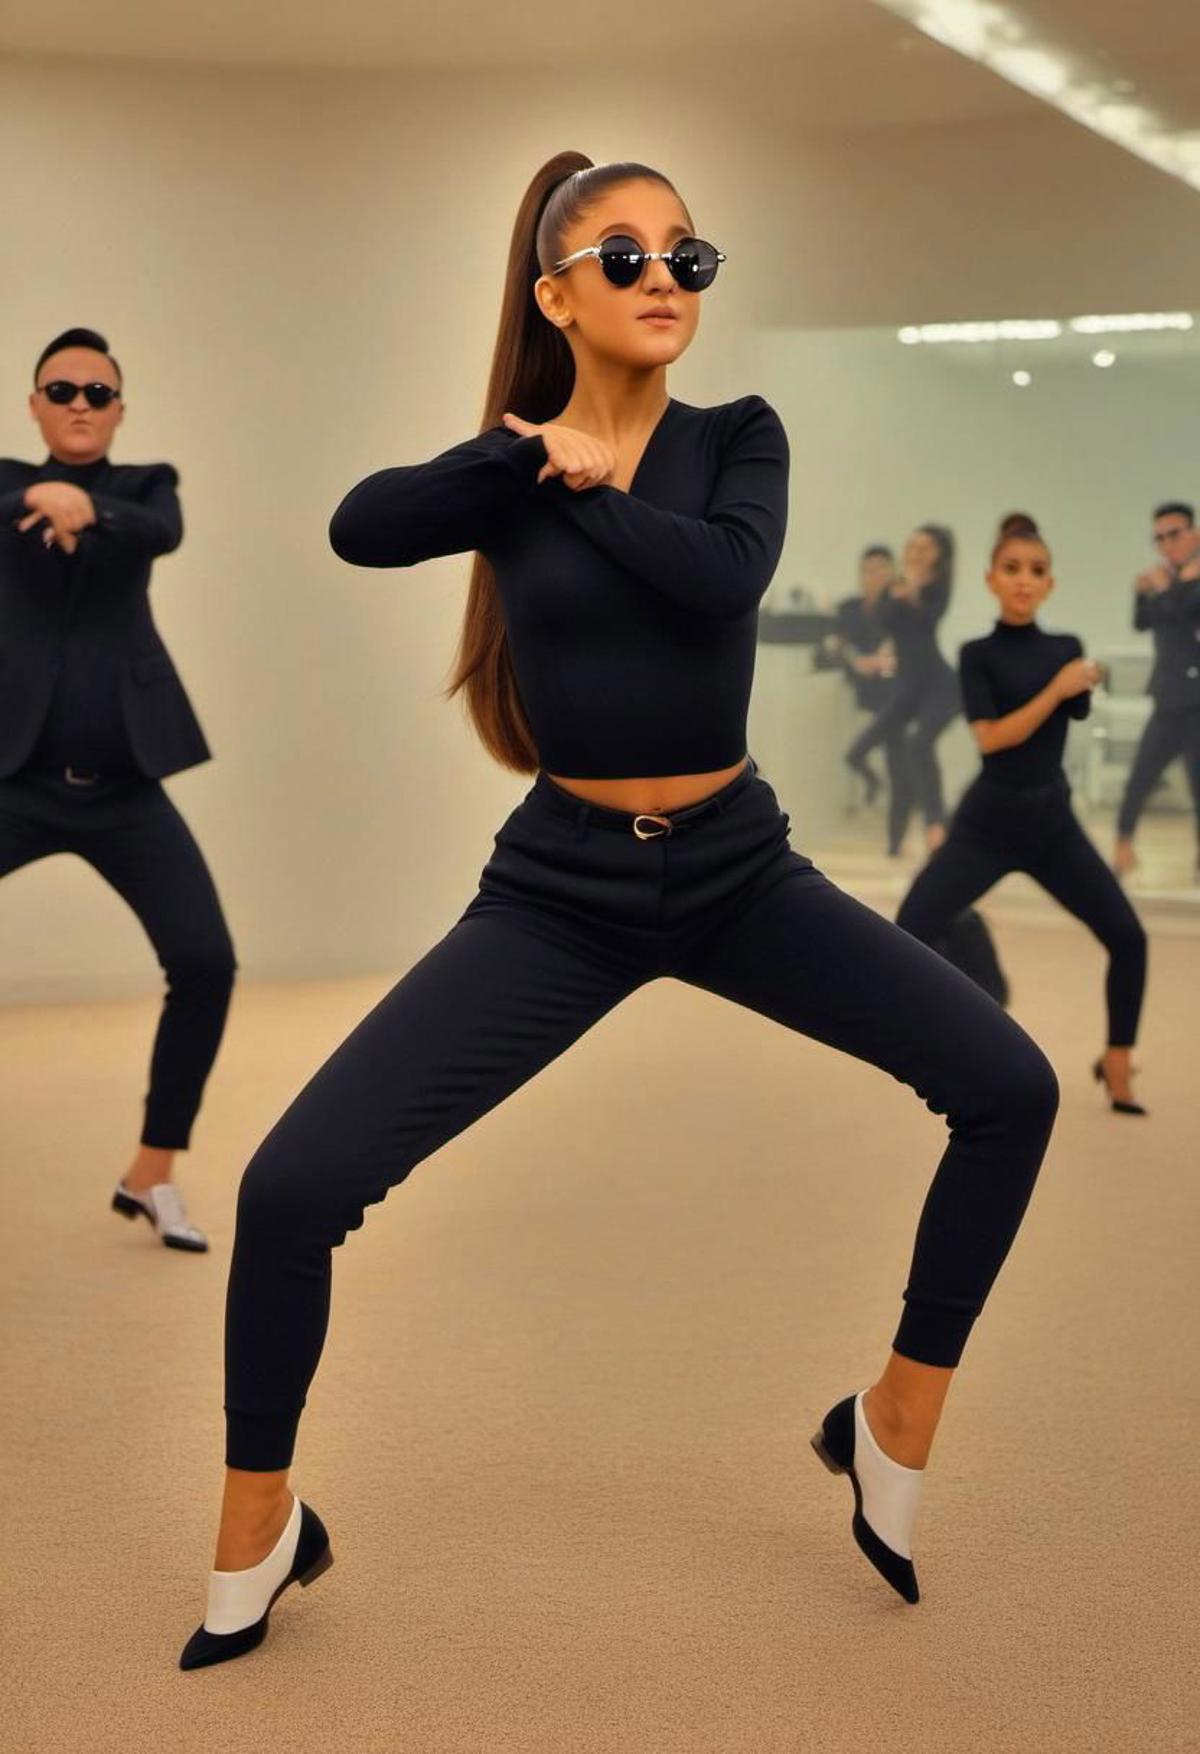 Gangnam Style Dance image by andresbravo2003